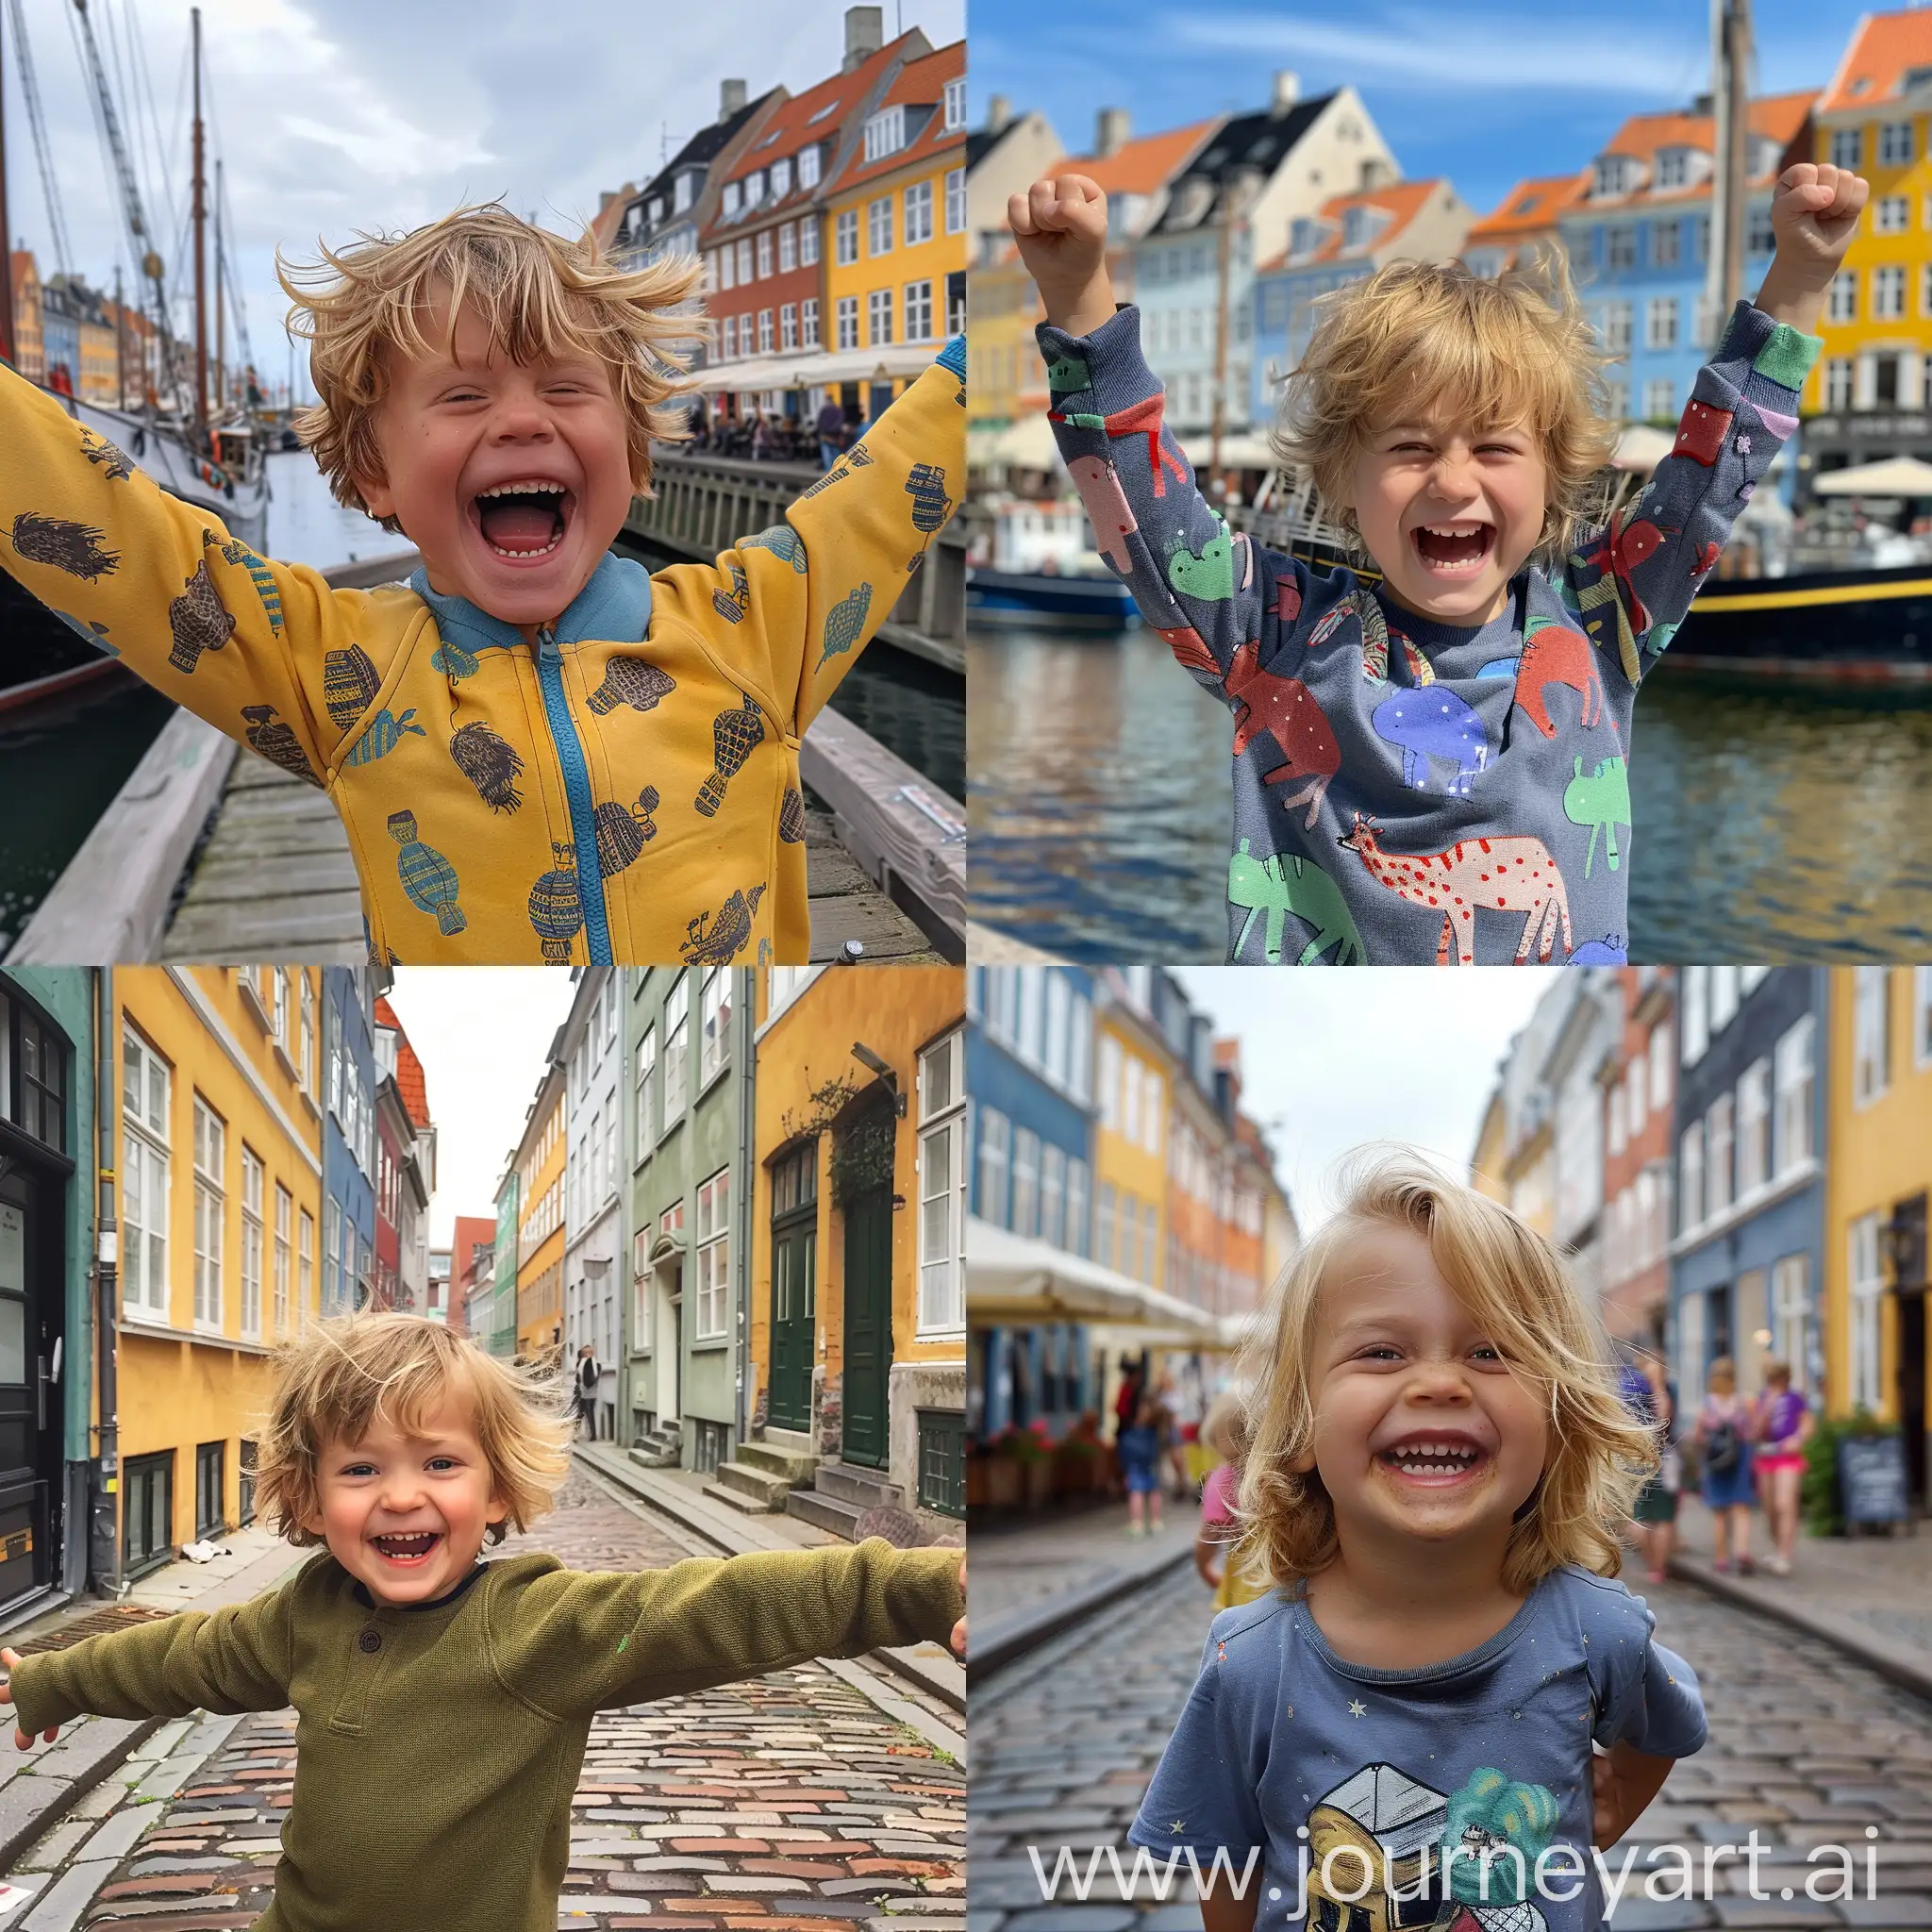 Joyful-Child-Exploring-Copenhagens-Charm-Vibrant-Square-Image